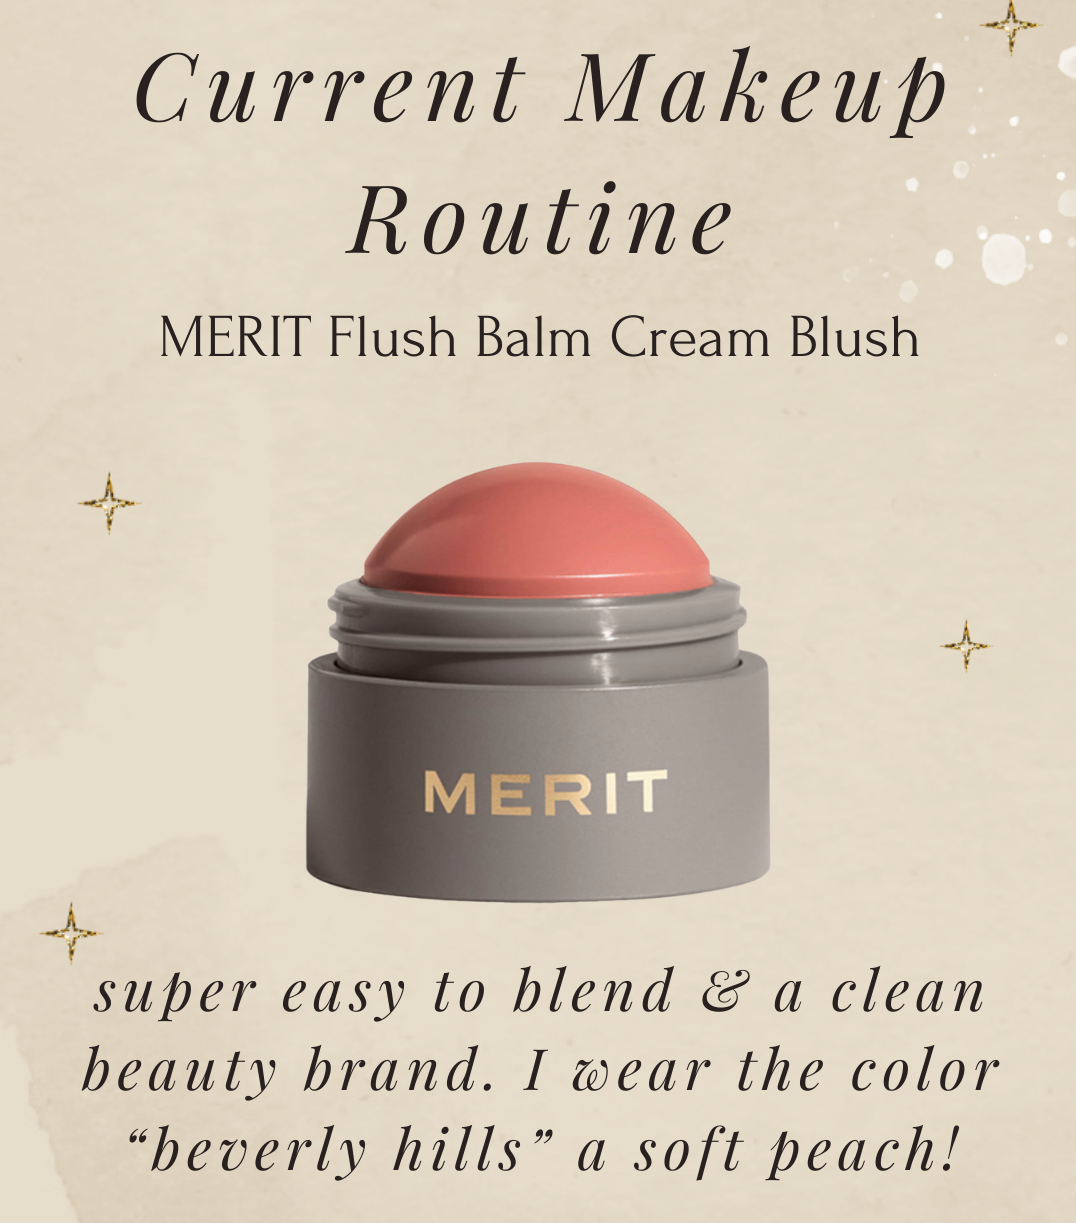 MERIT Flush Balm Cream Blush | My Current Winter Makeup Routine | Affordable by Amanda